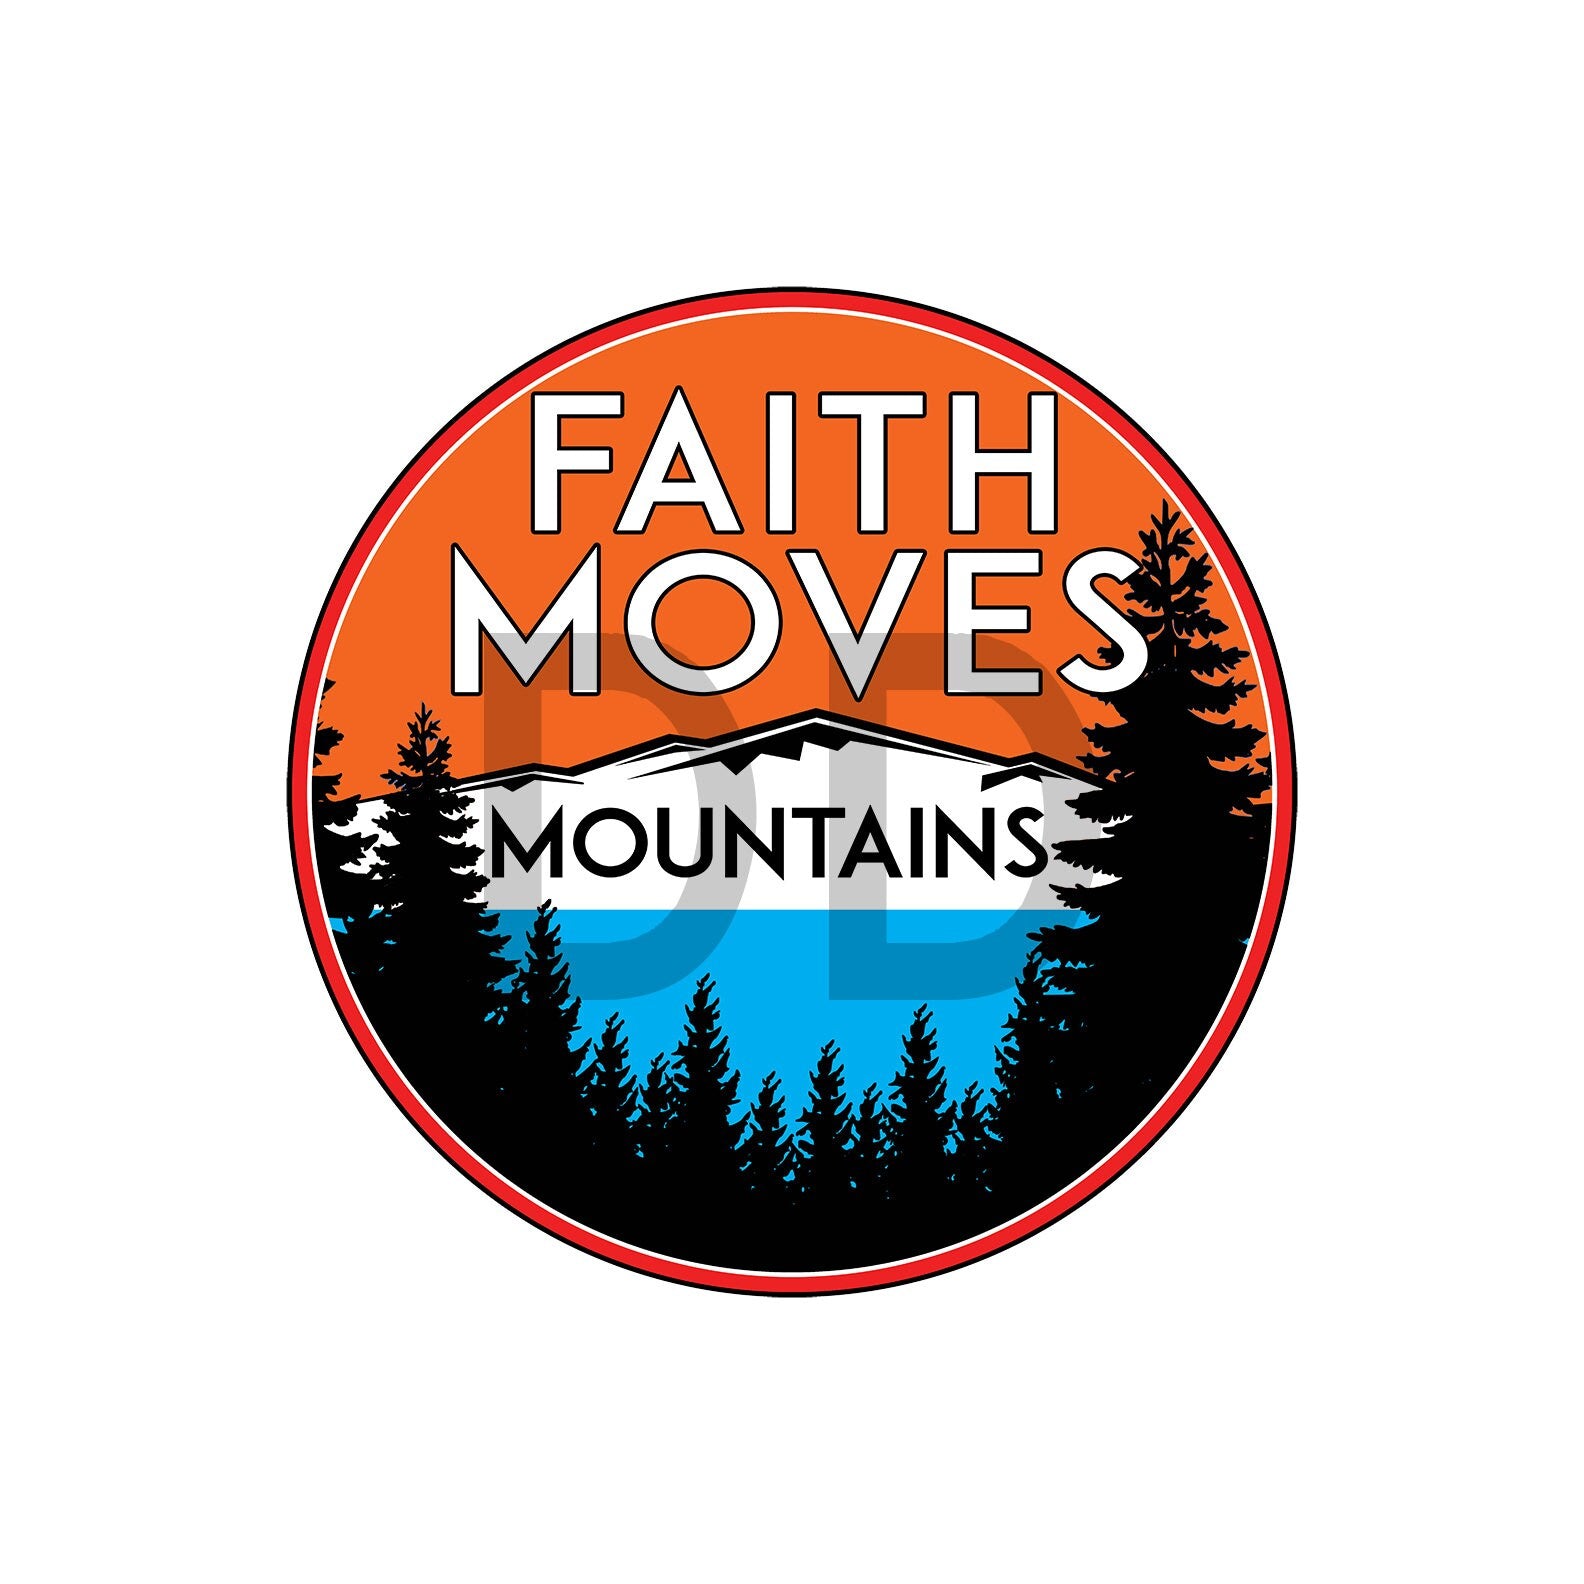 FAITH MOVES MOUNTAINS Decal Sticker Vinyl Mountains 3" x 3" Inspirational